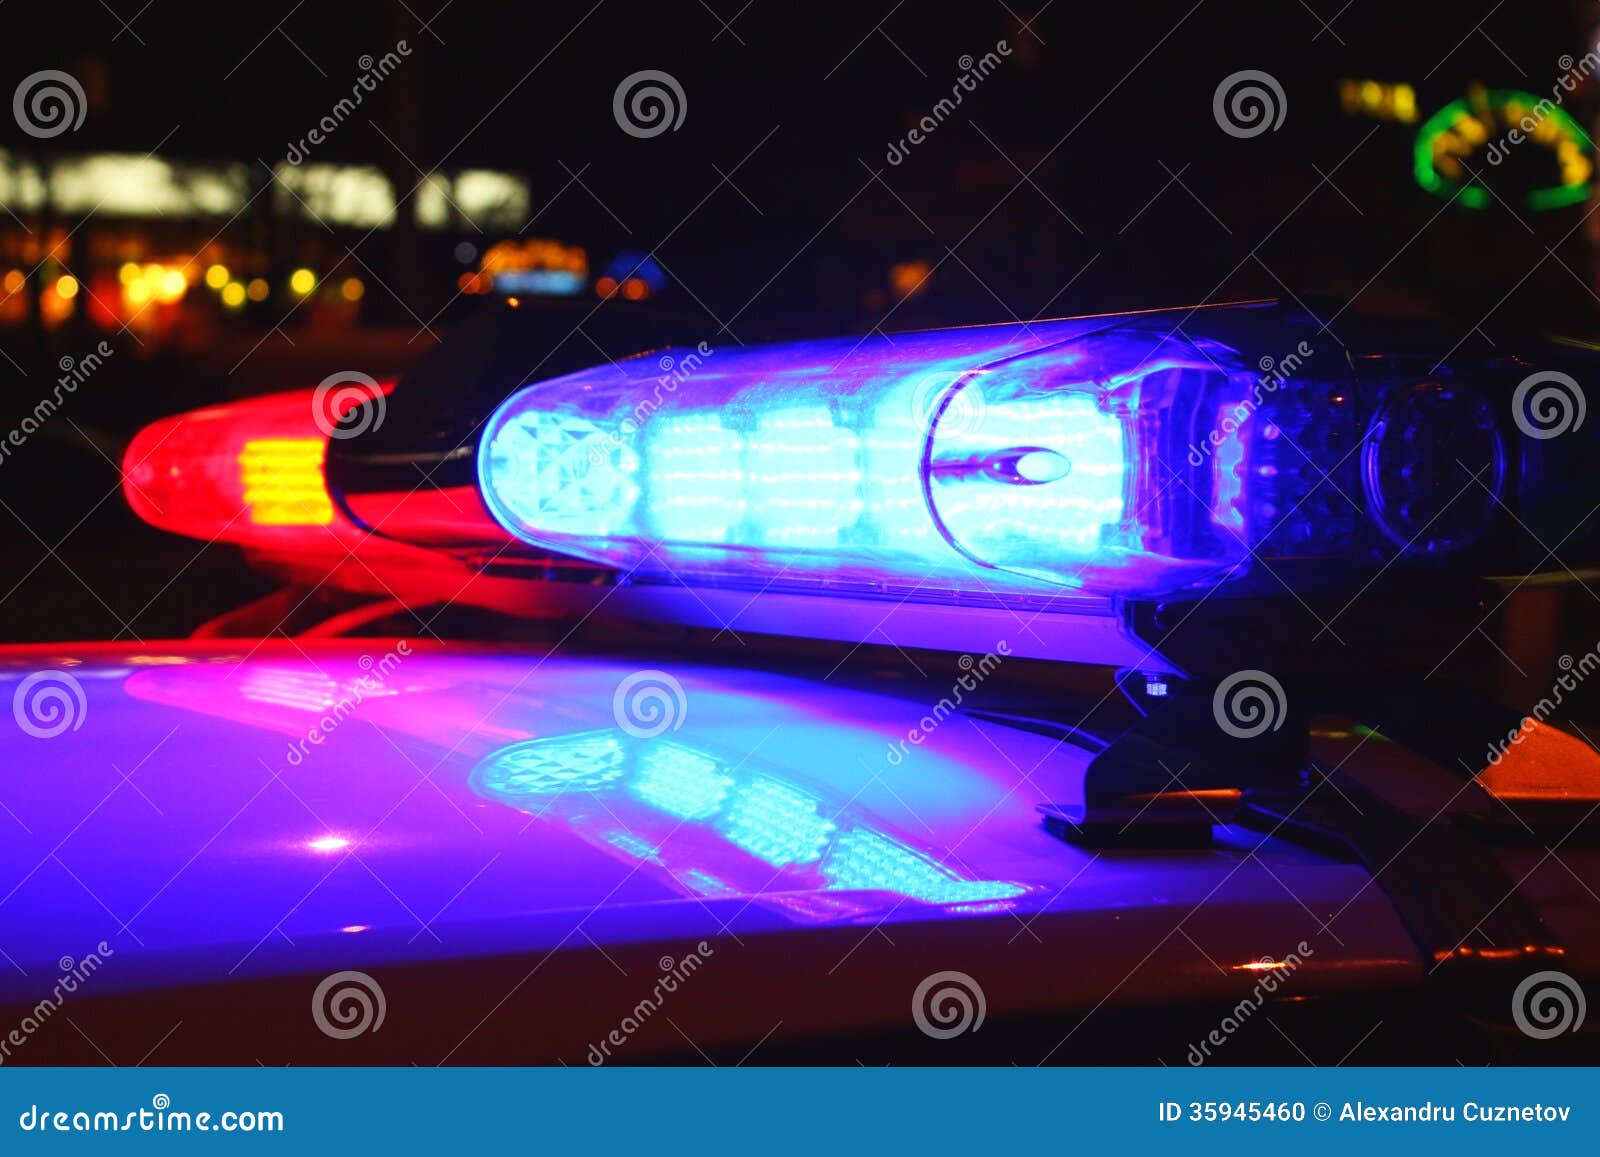 police lights by night